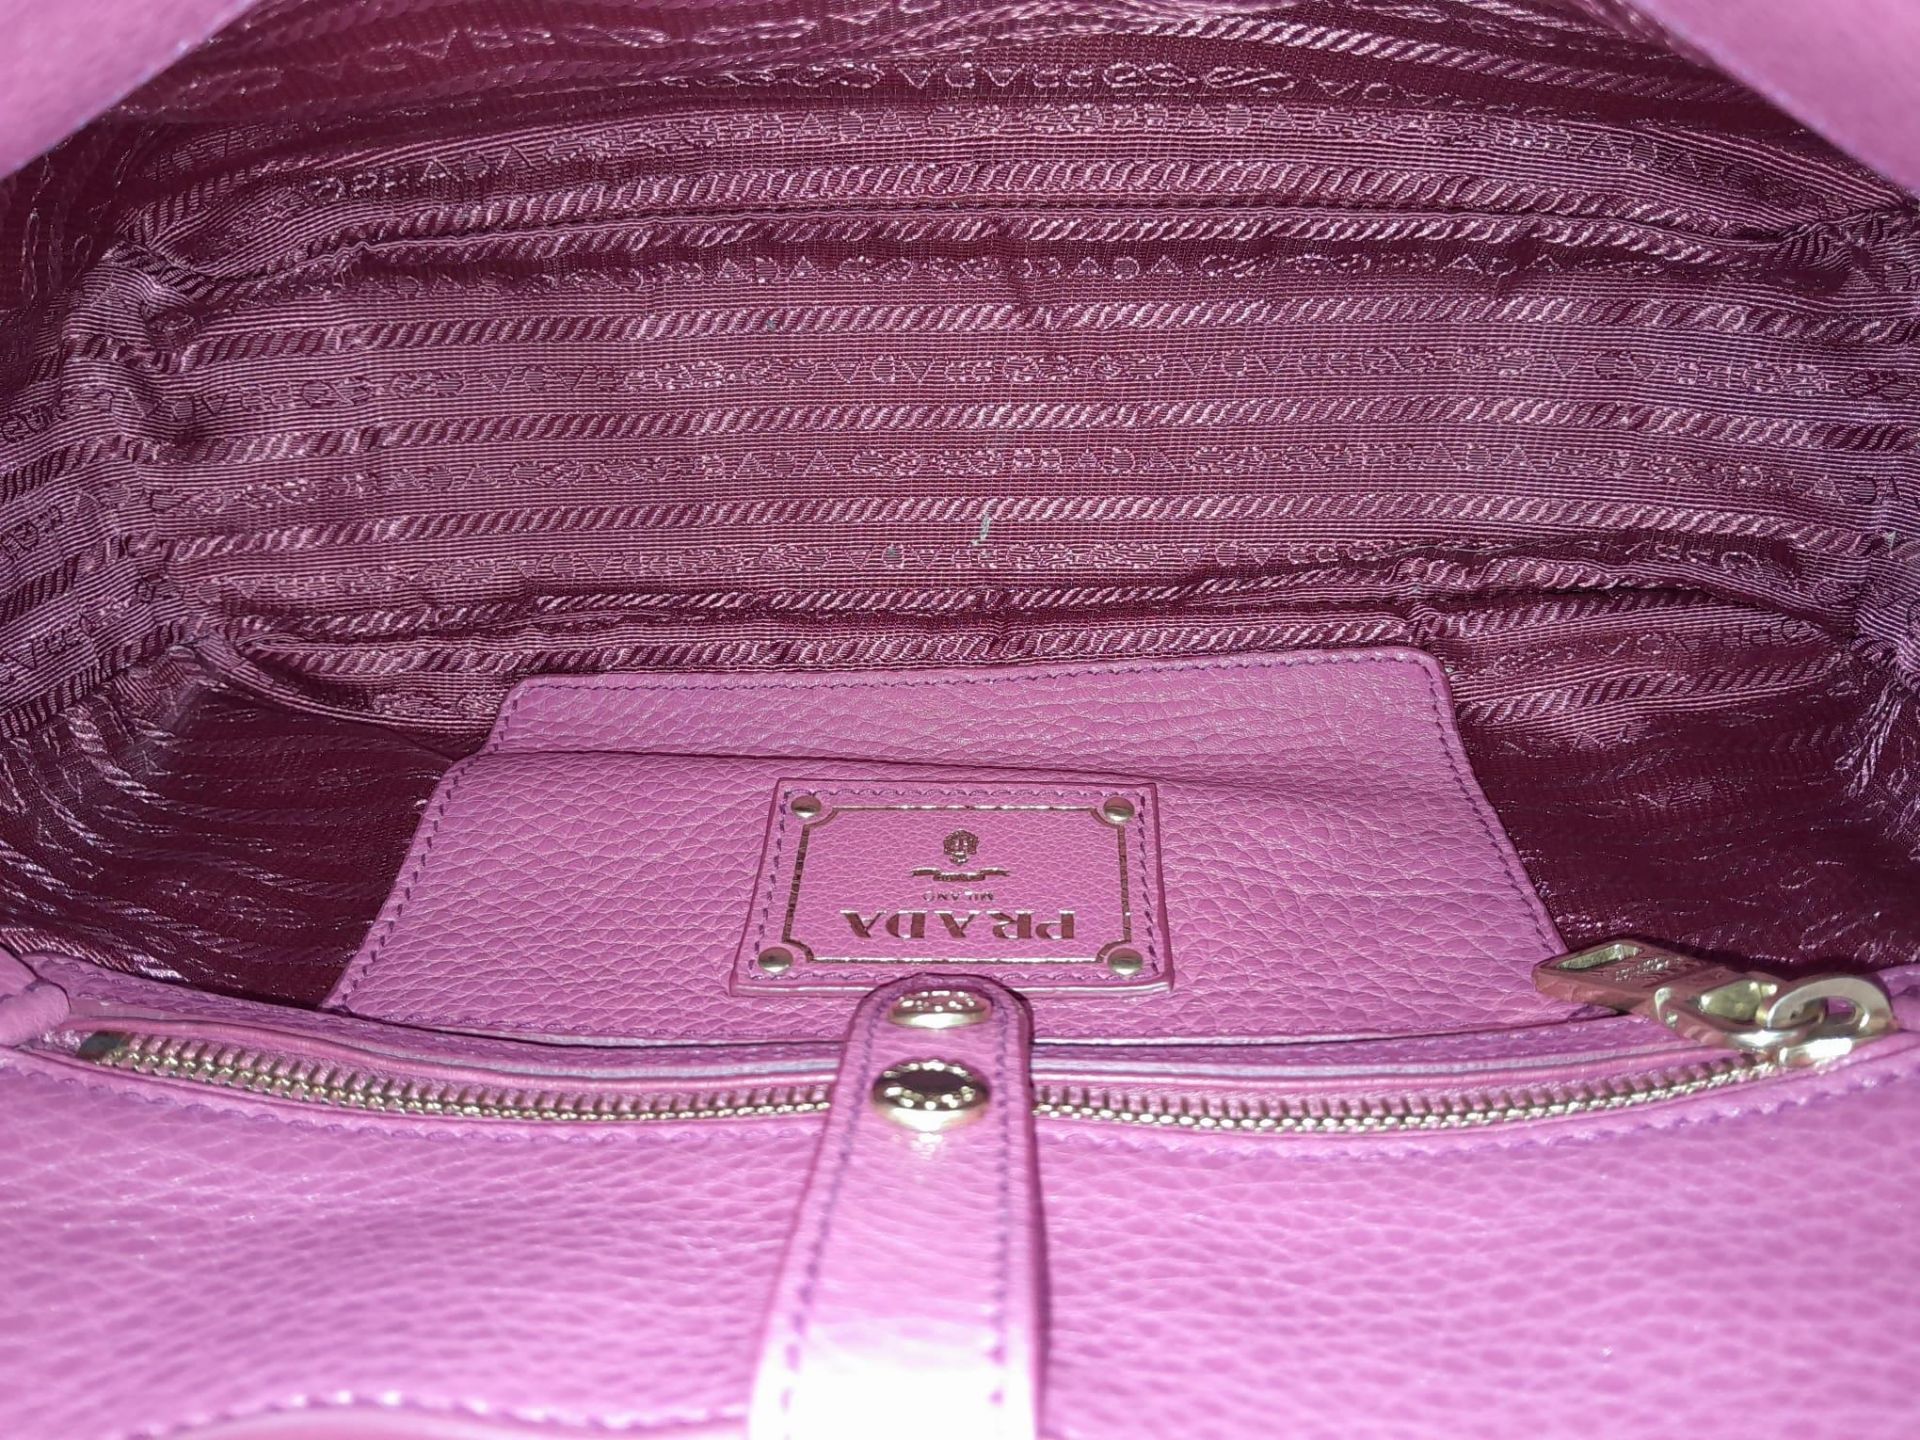 A Prada Vitello Daino satchel bag, soft pink leather, matching leather/fabric interior, gold tone - Bild 6 aus 11